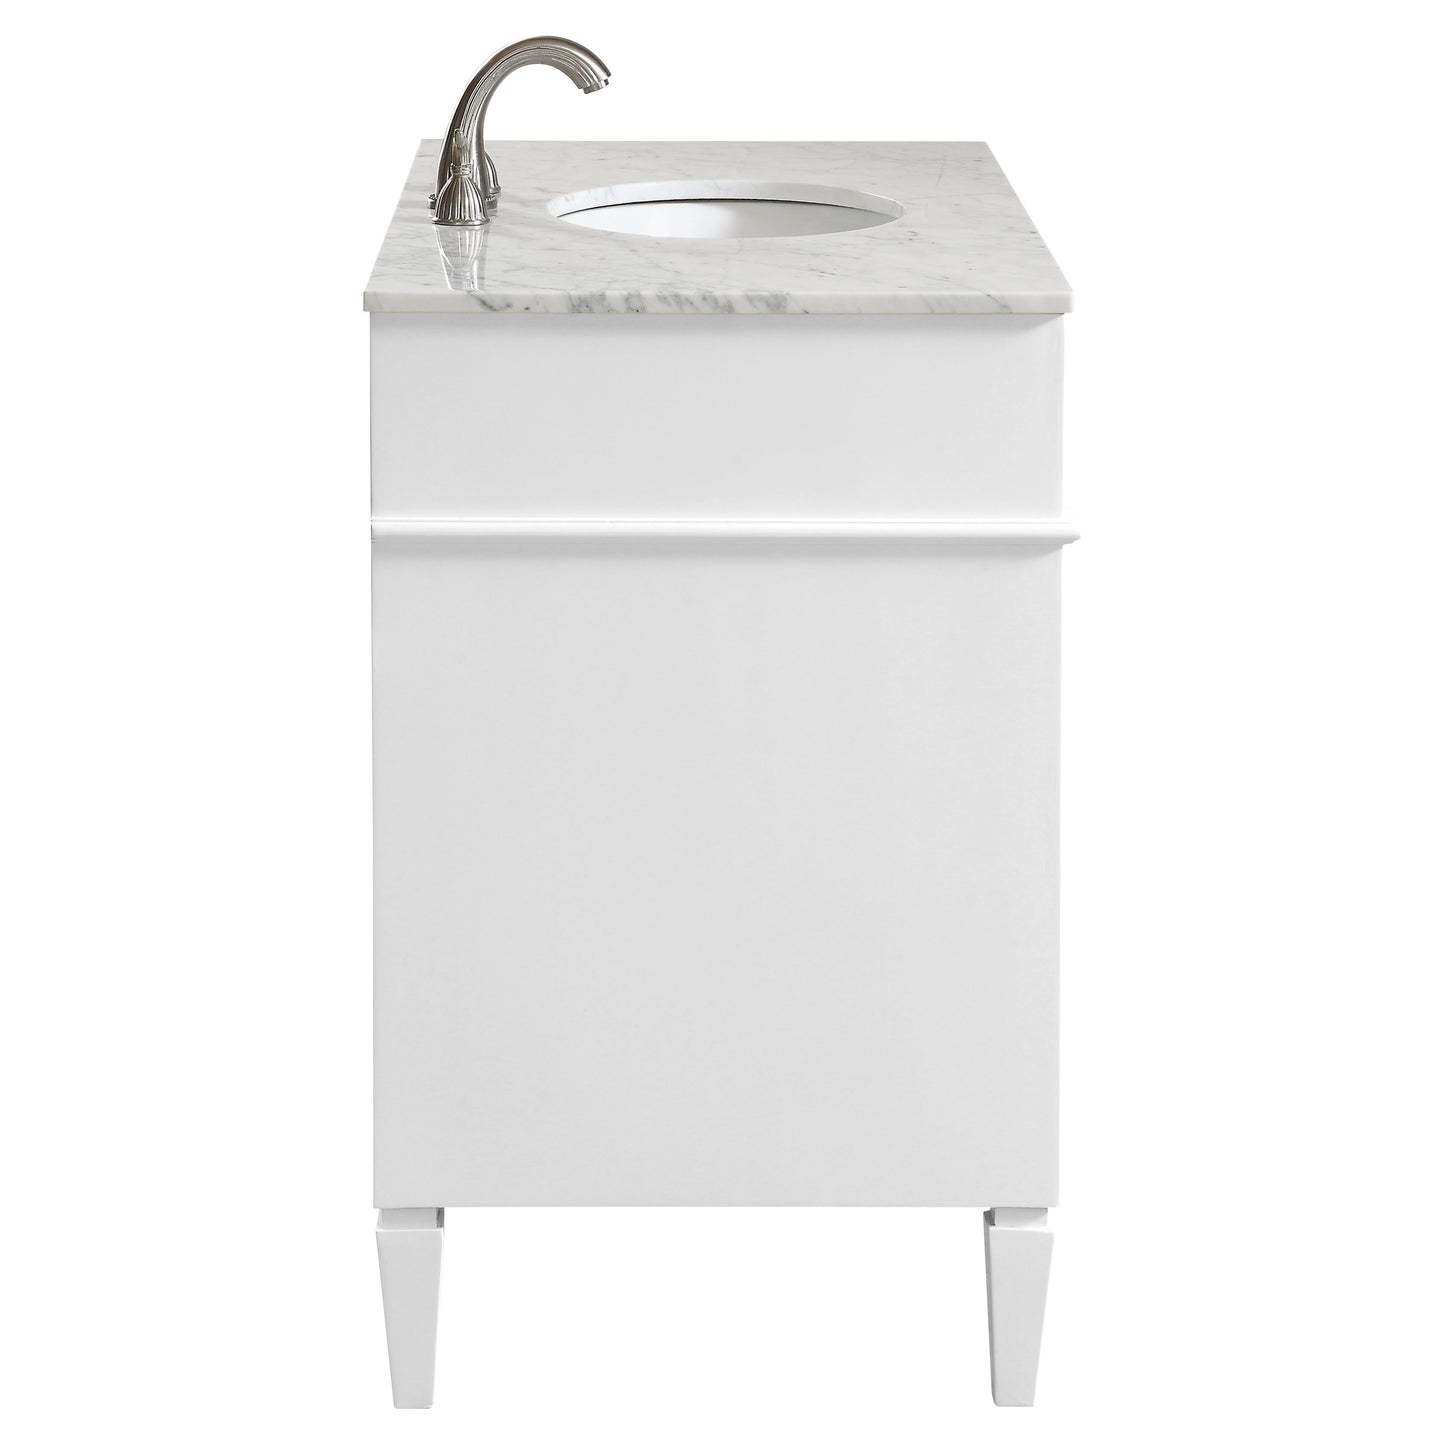 VF12540WH 40" Single Bathroom Vanity Set in White